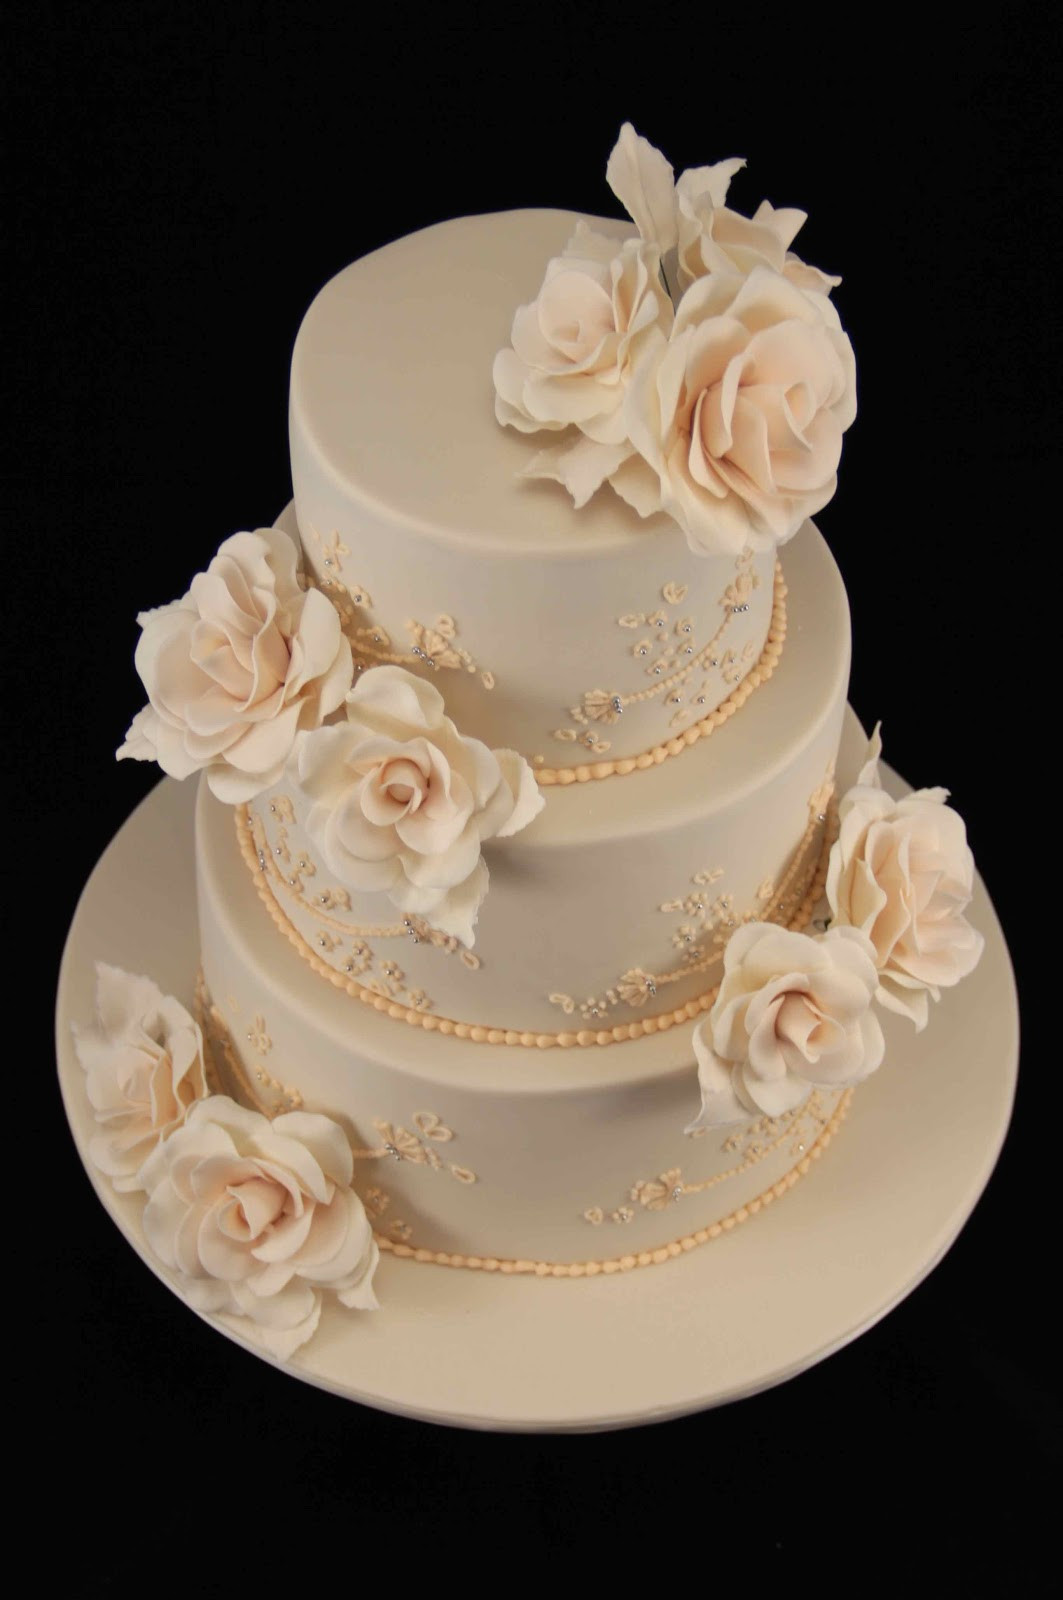 Rose Wedding Cakes
 Bakerz Dad Rose Wedding Cake